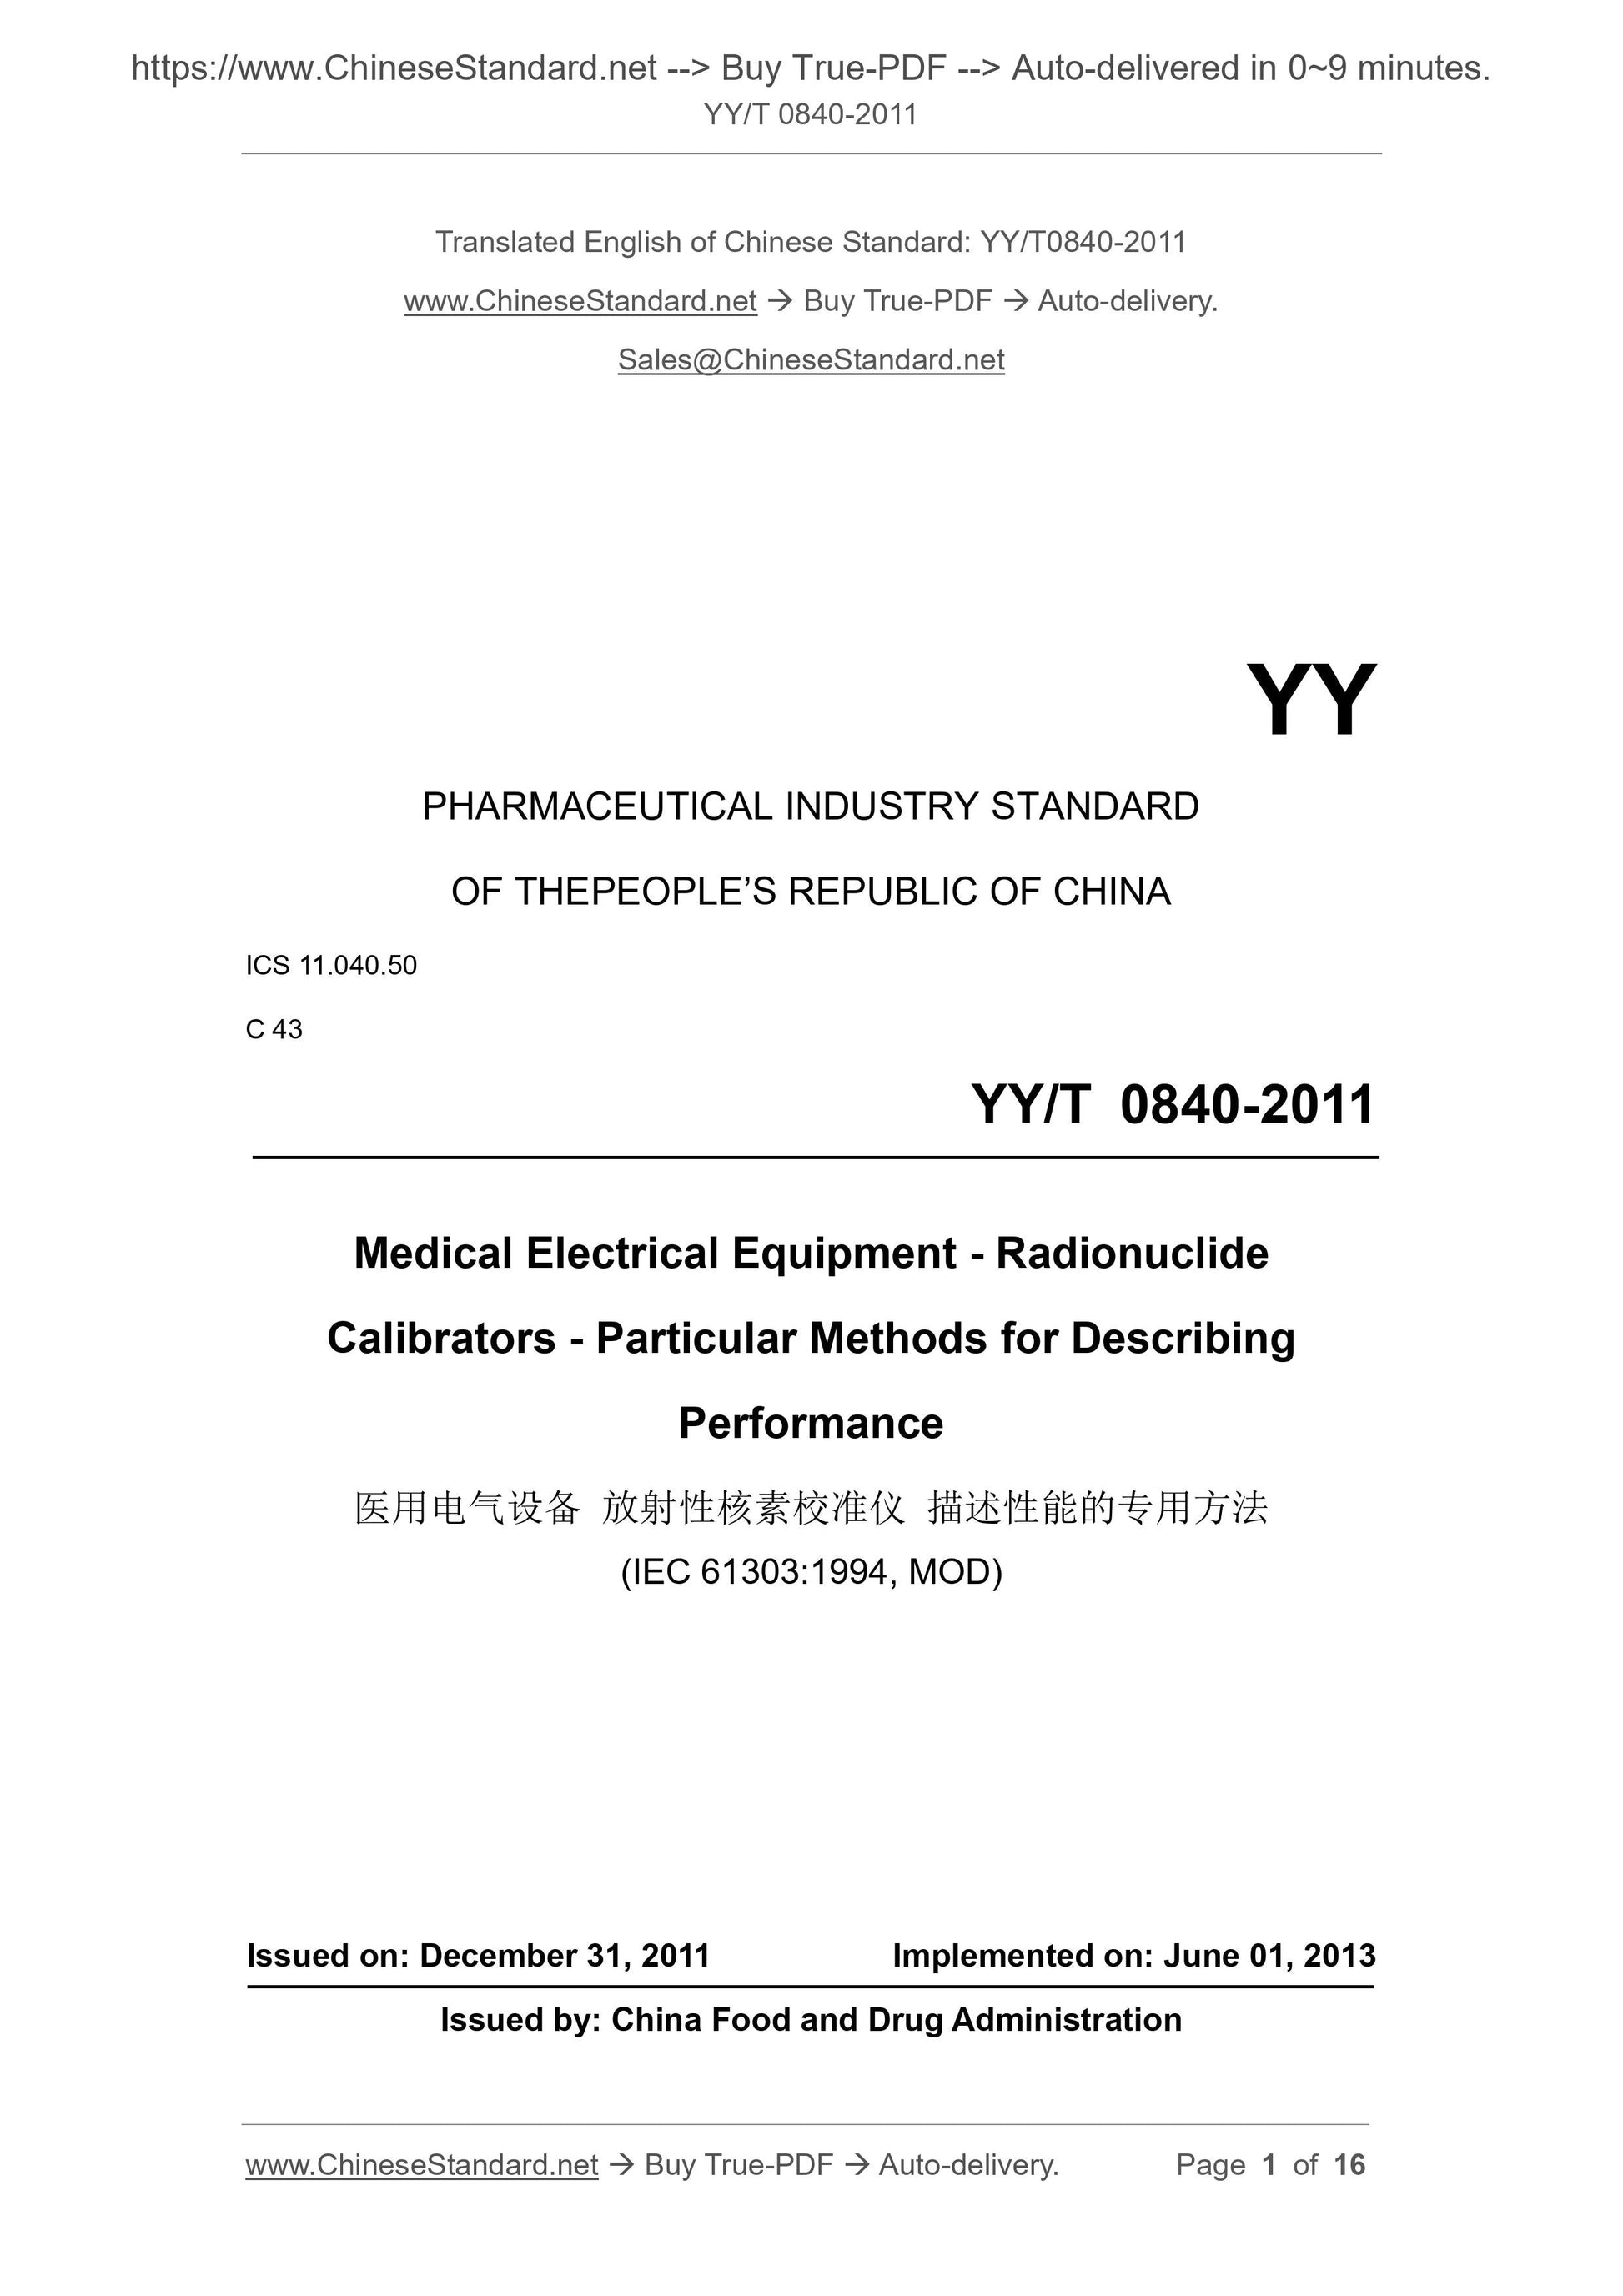 YY/T 0840-2011 Page 1